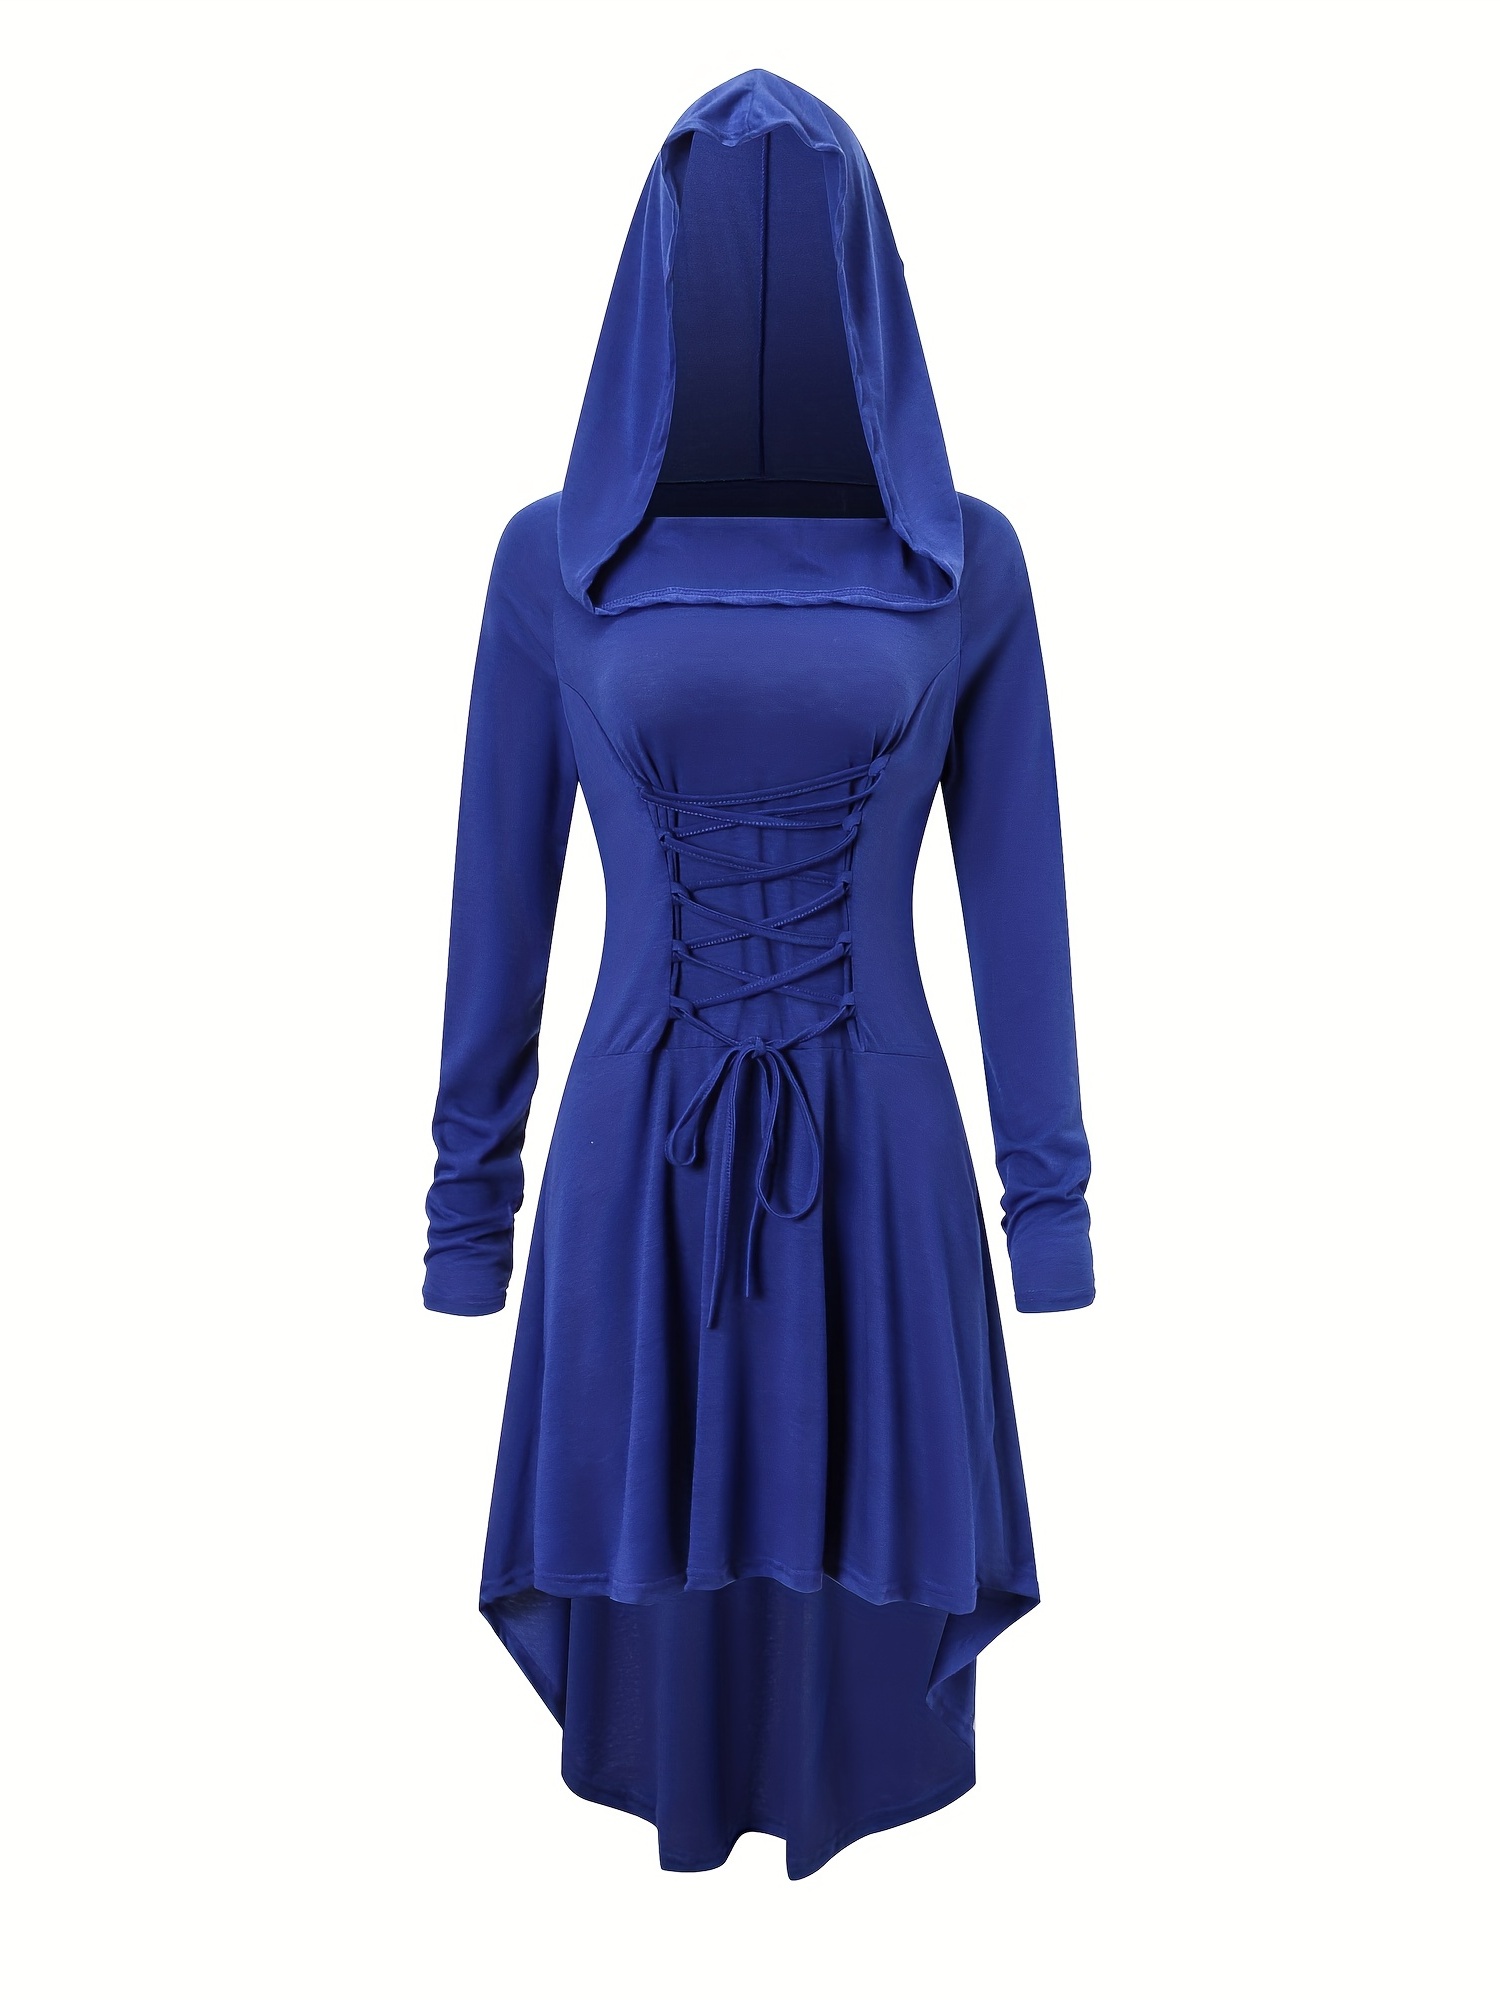 Women's Gothic Hooded Costume Dress